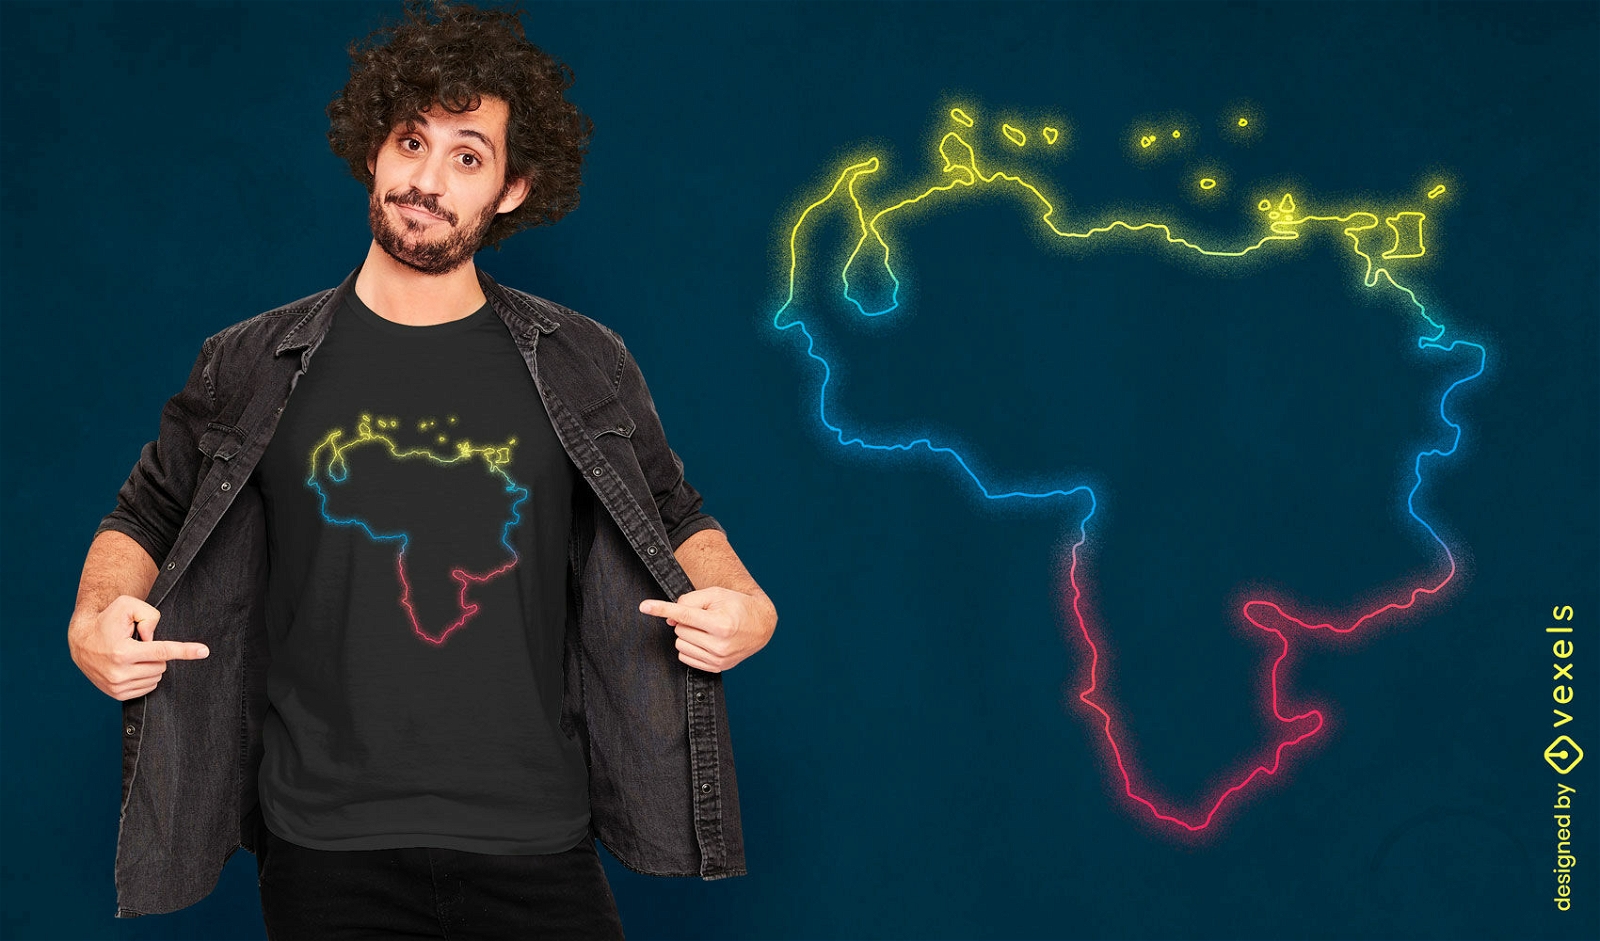 Venezuelan neon map t-shirt design